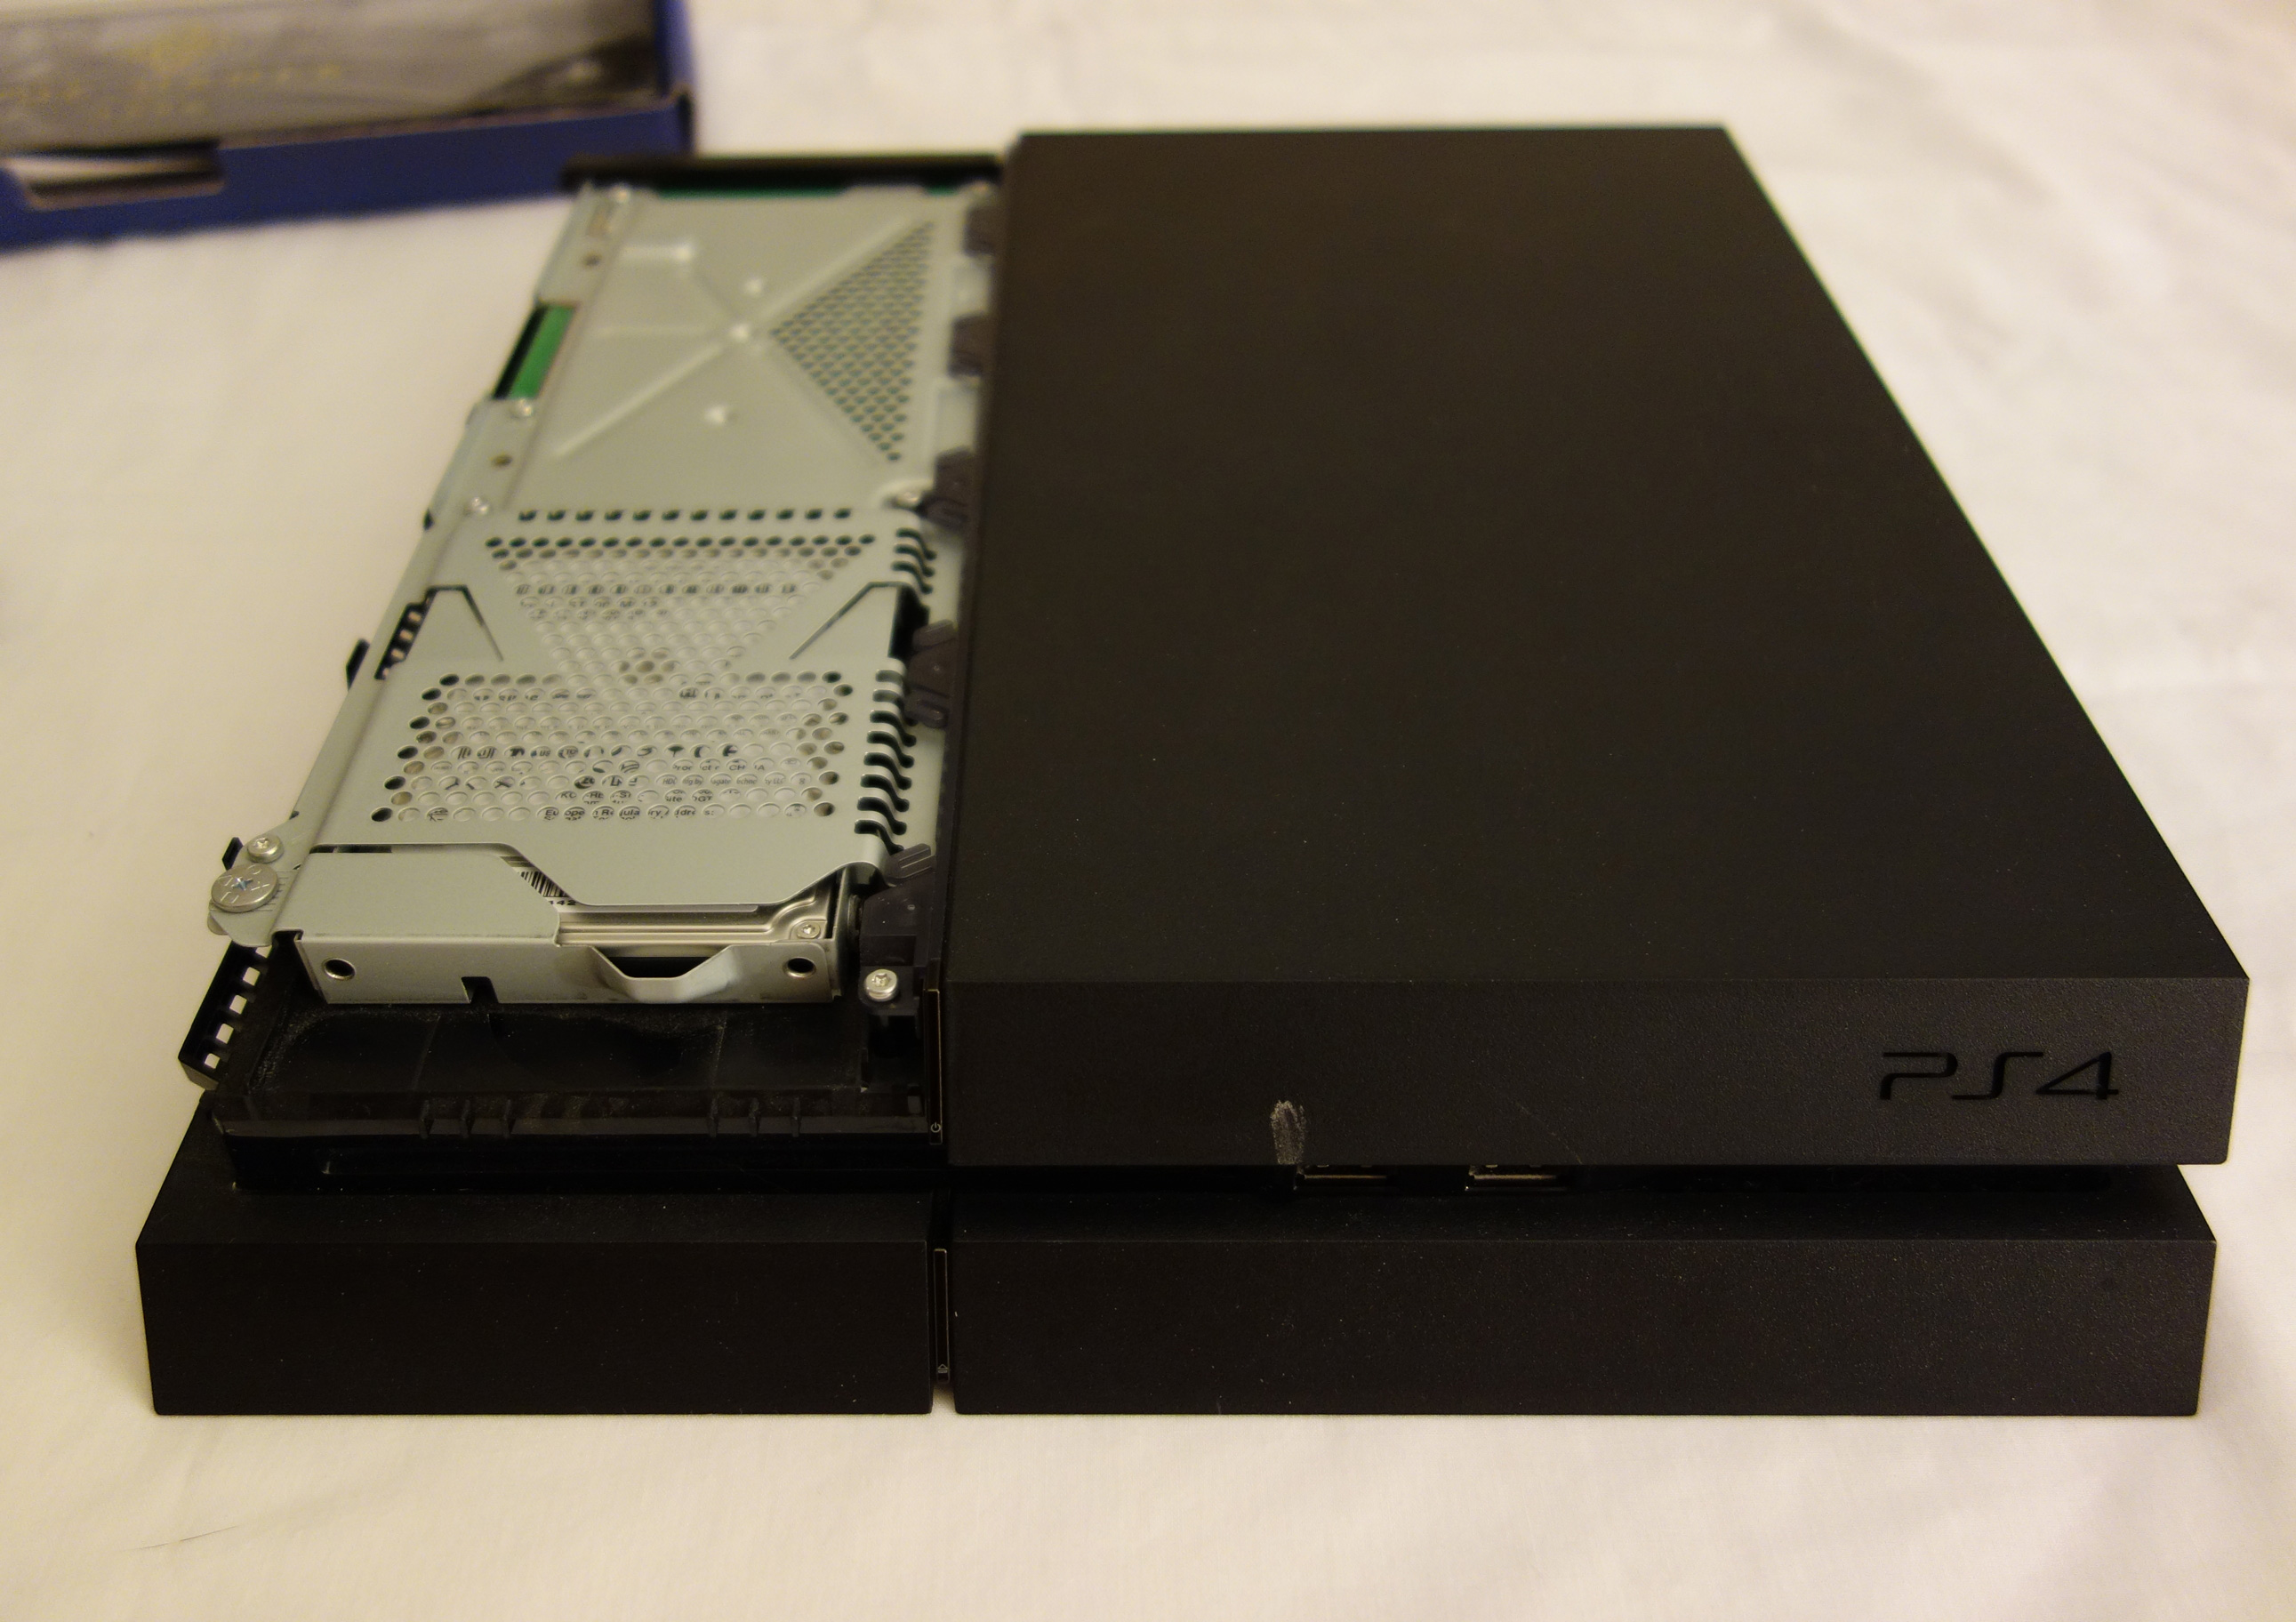 PS4 no hard drive cover